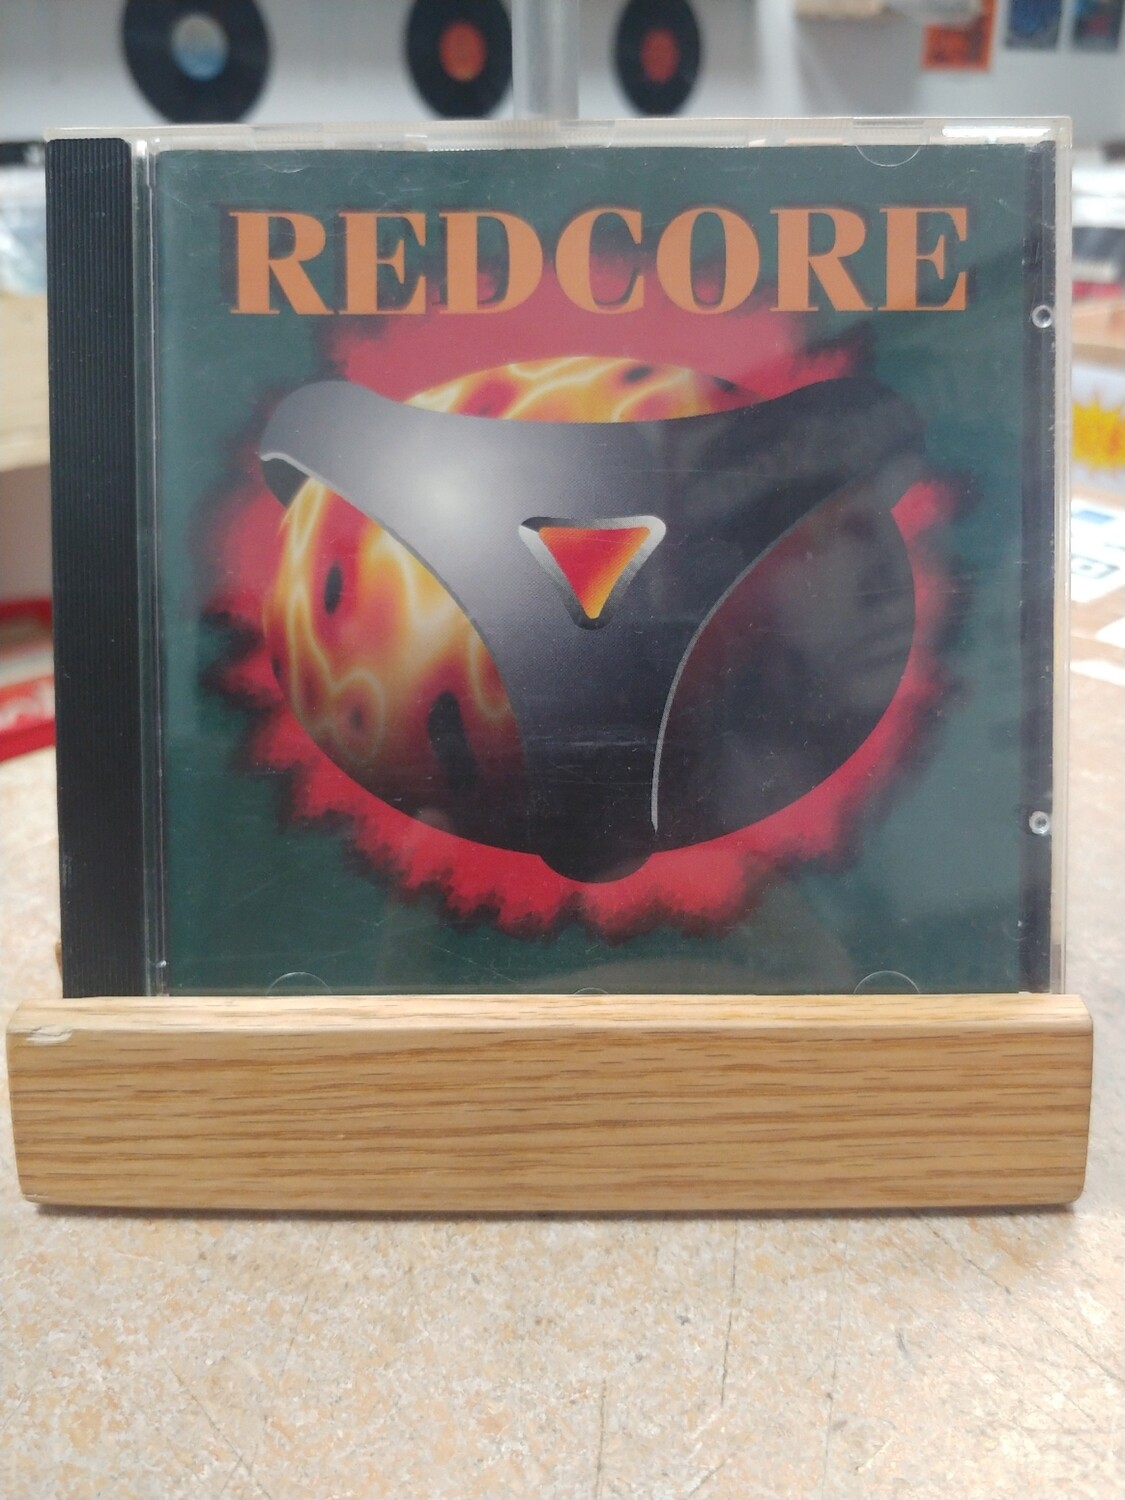 Redcore - Redcore (CD)